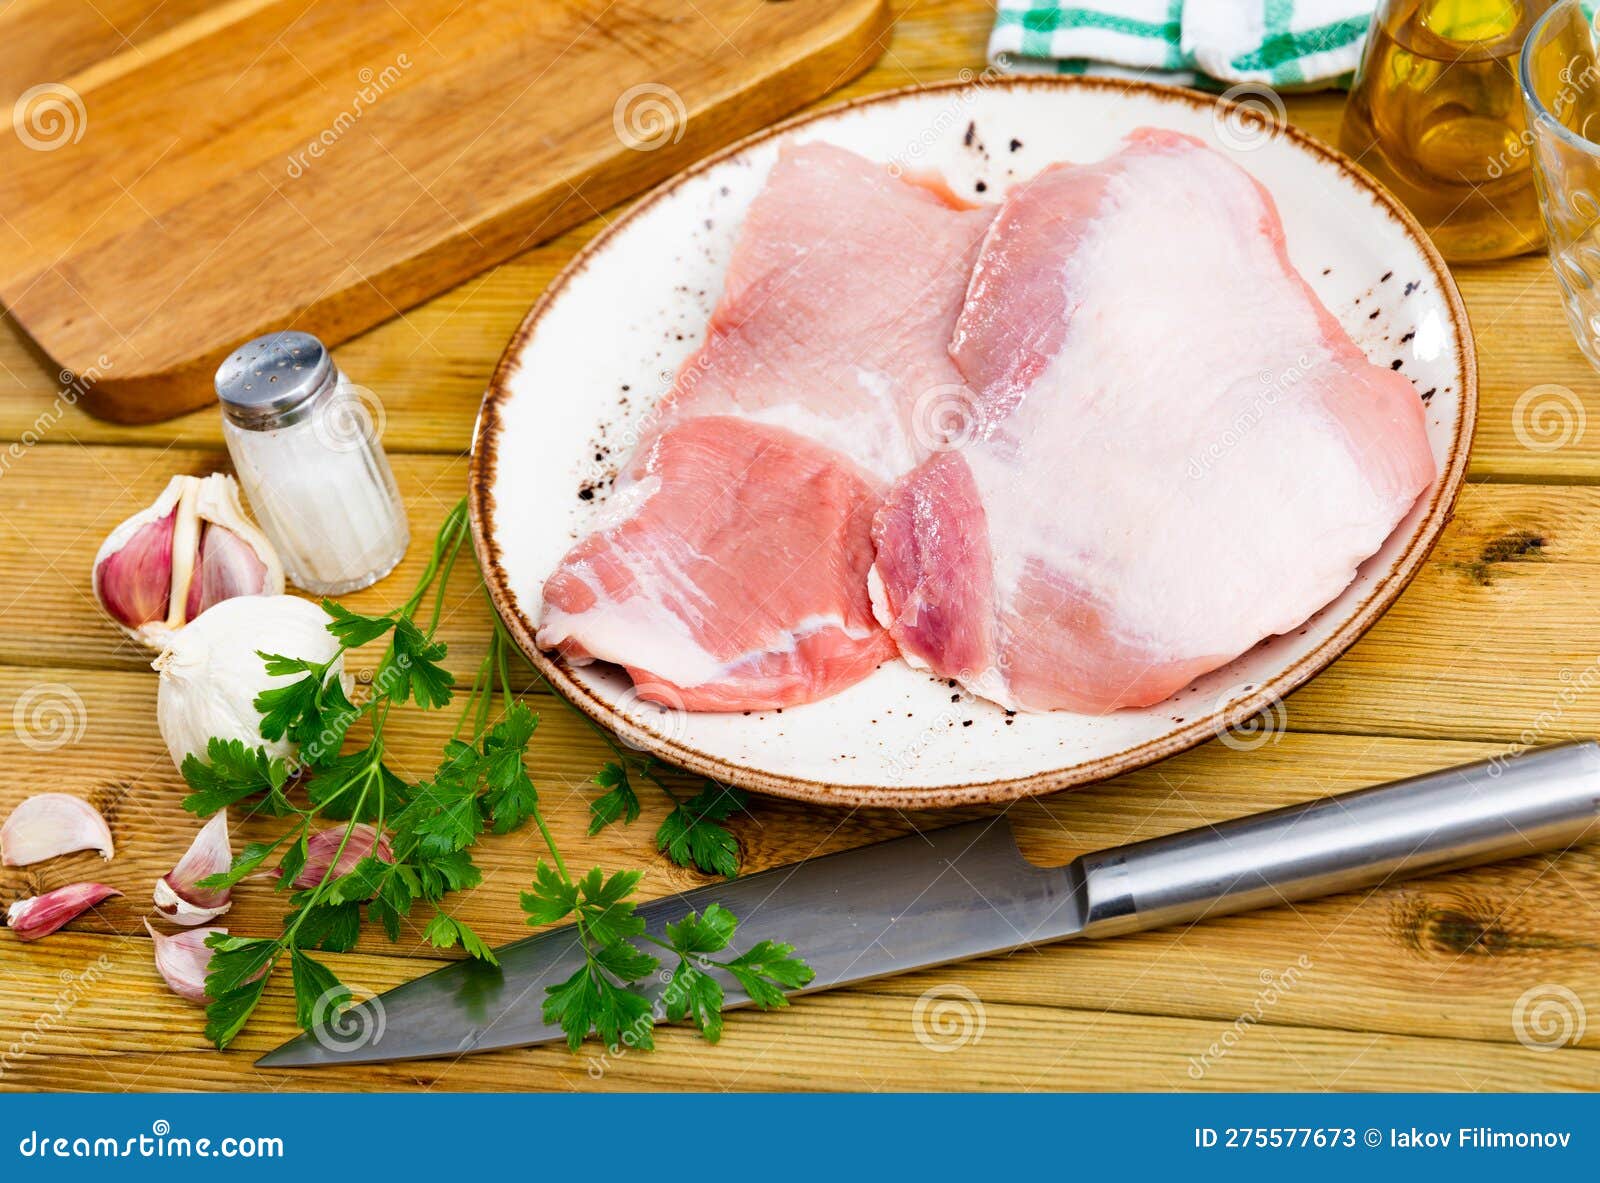 fresh raw pork secreto steak and spices prepared for cooking